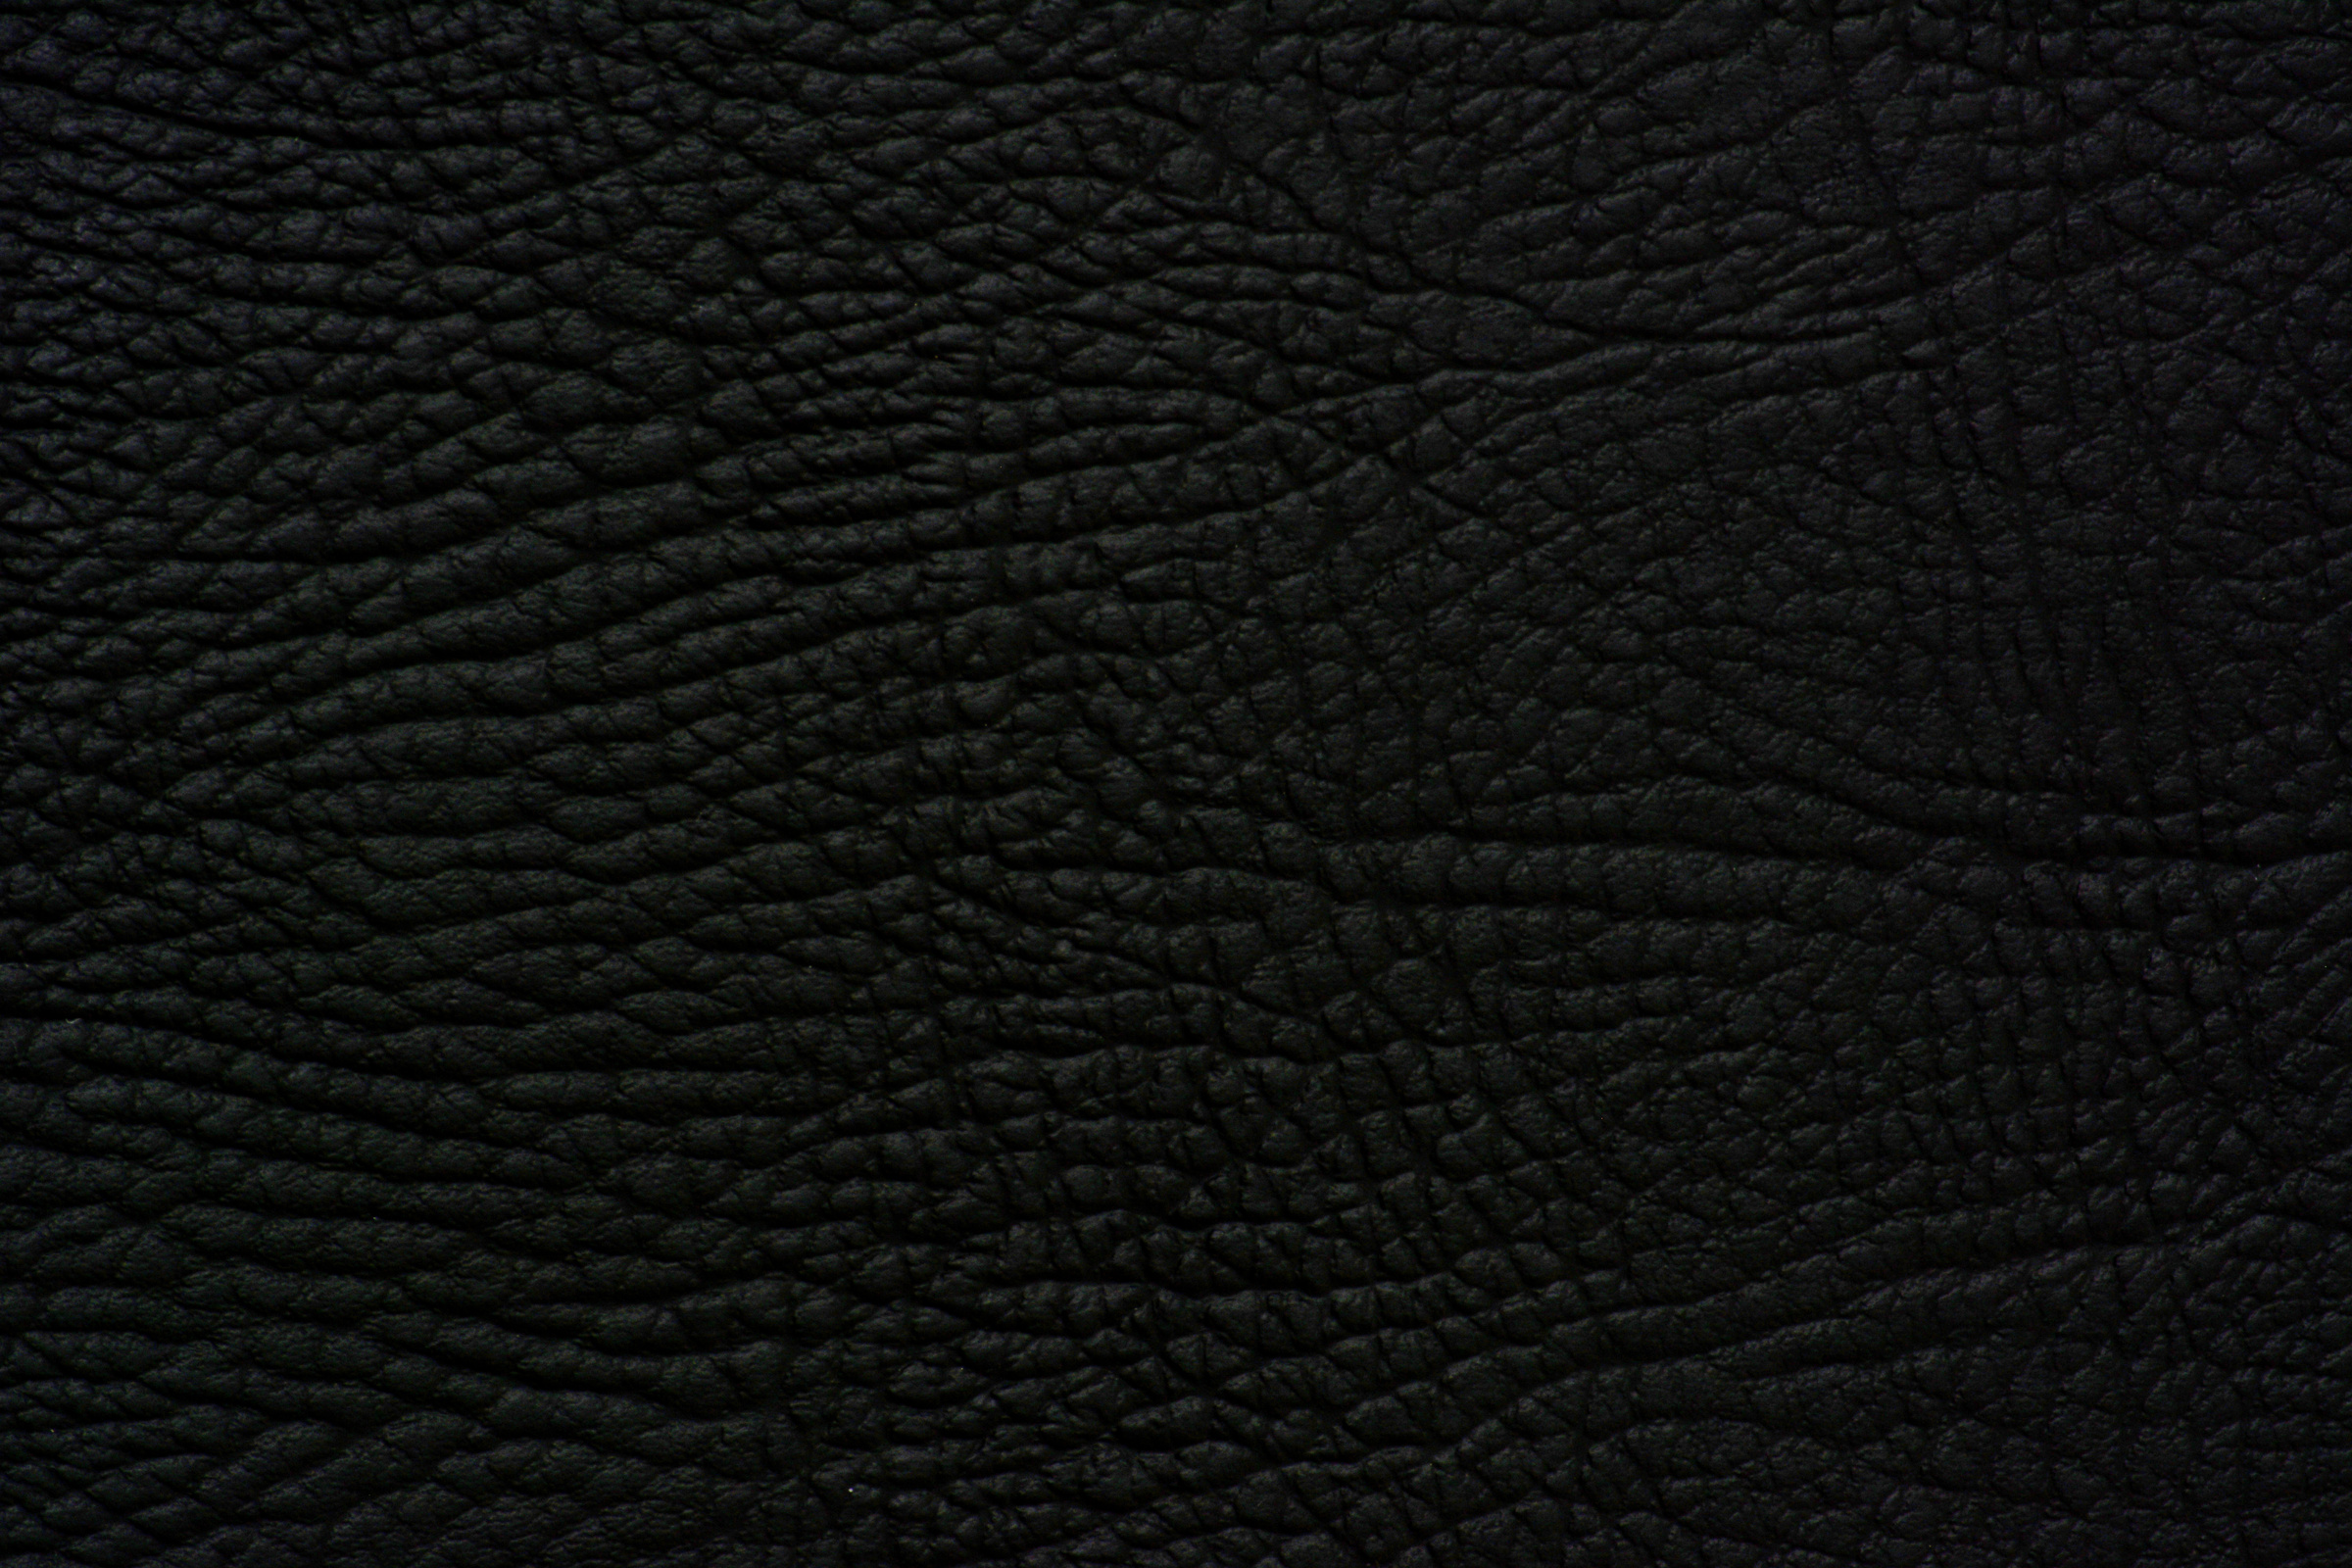 Black Leather Background